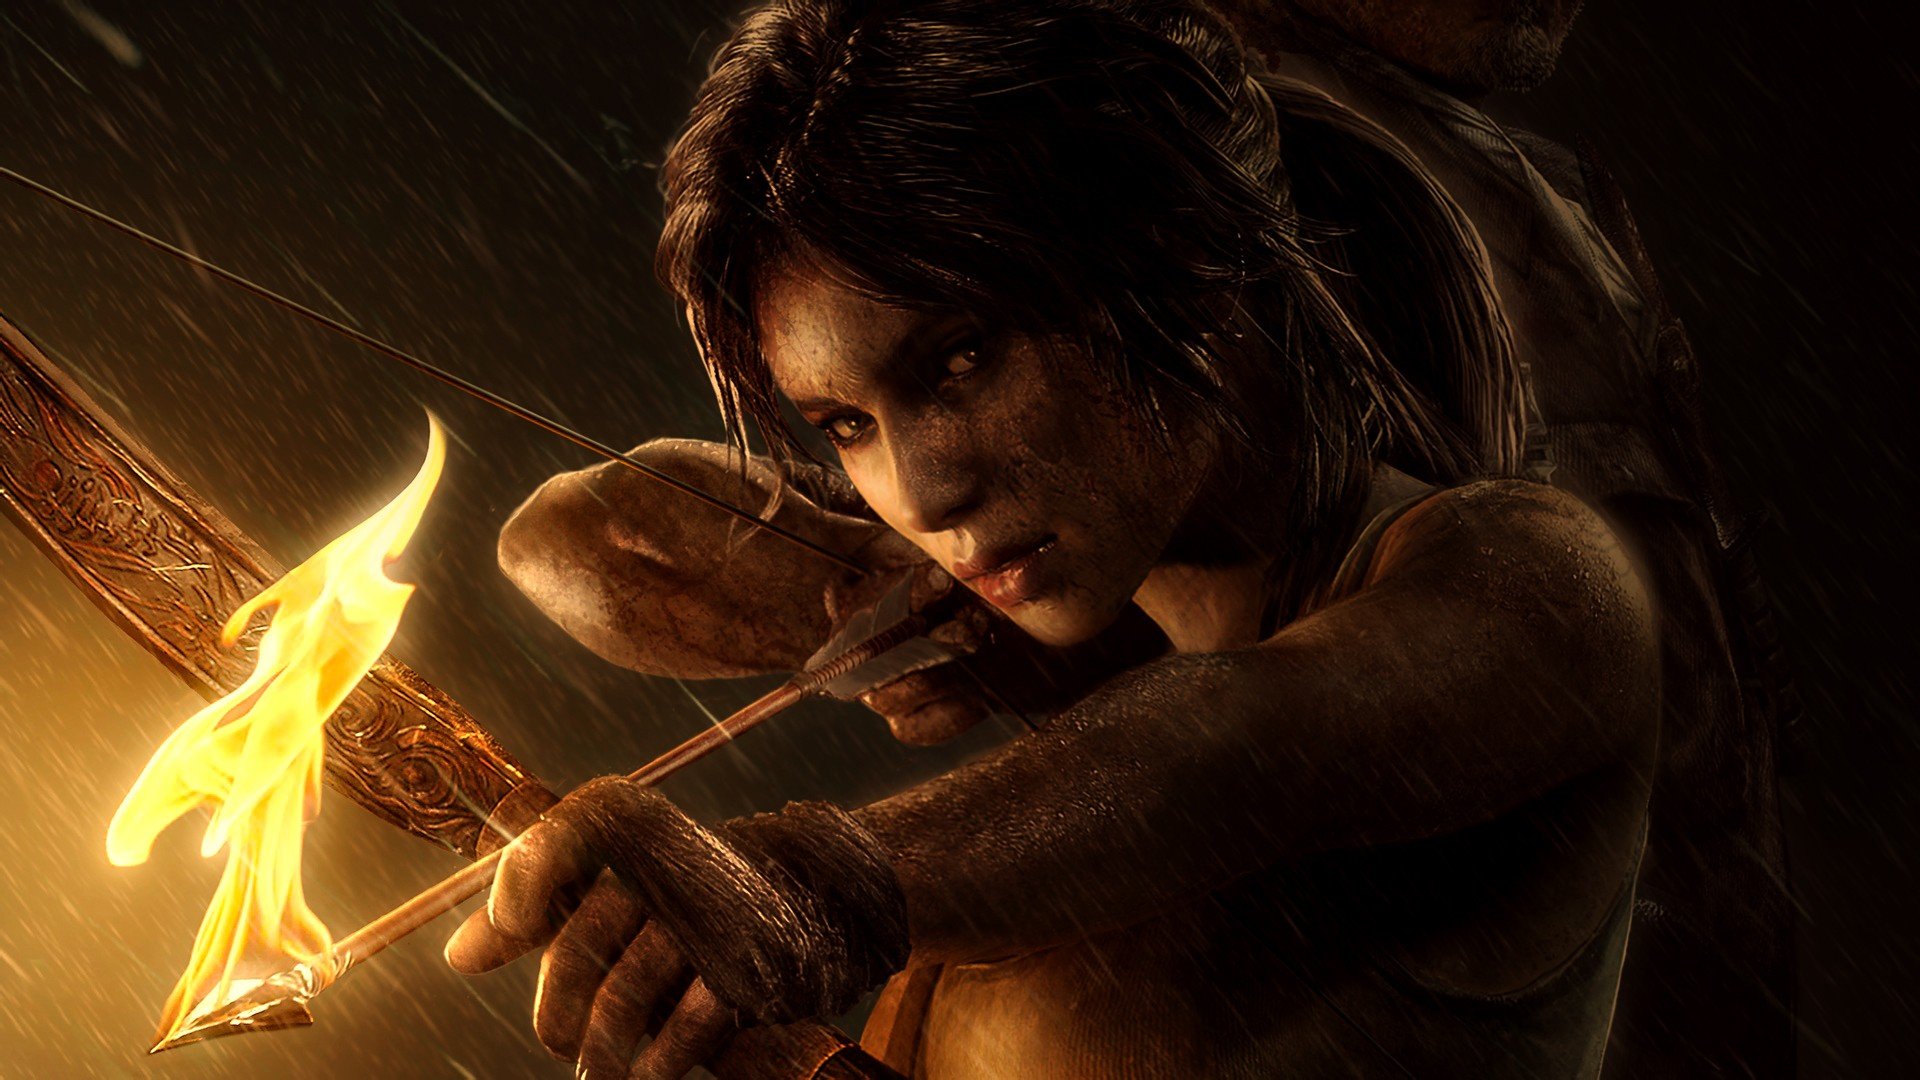 1920x1080 Tomb Raider Wallpaper Background Image. 